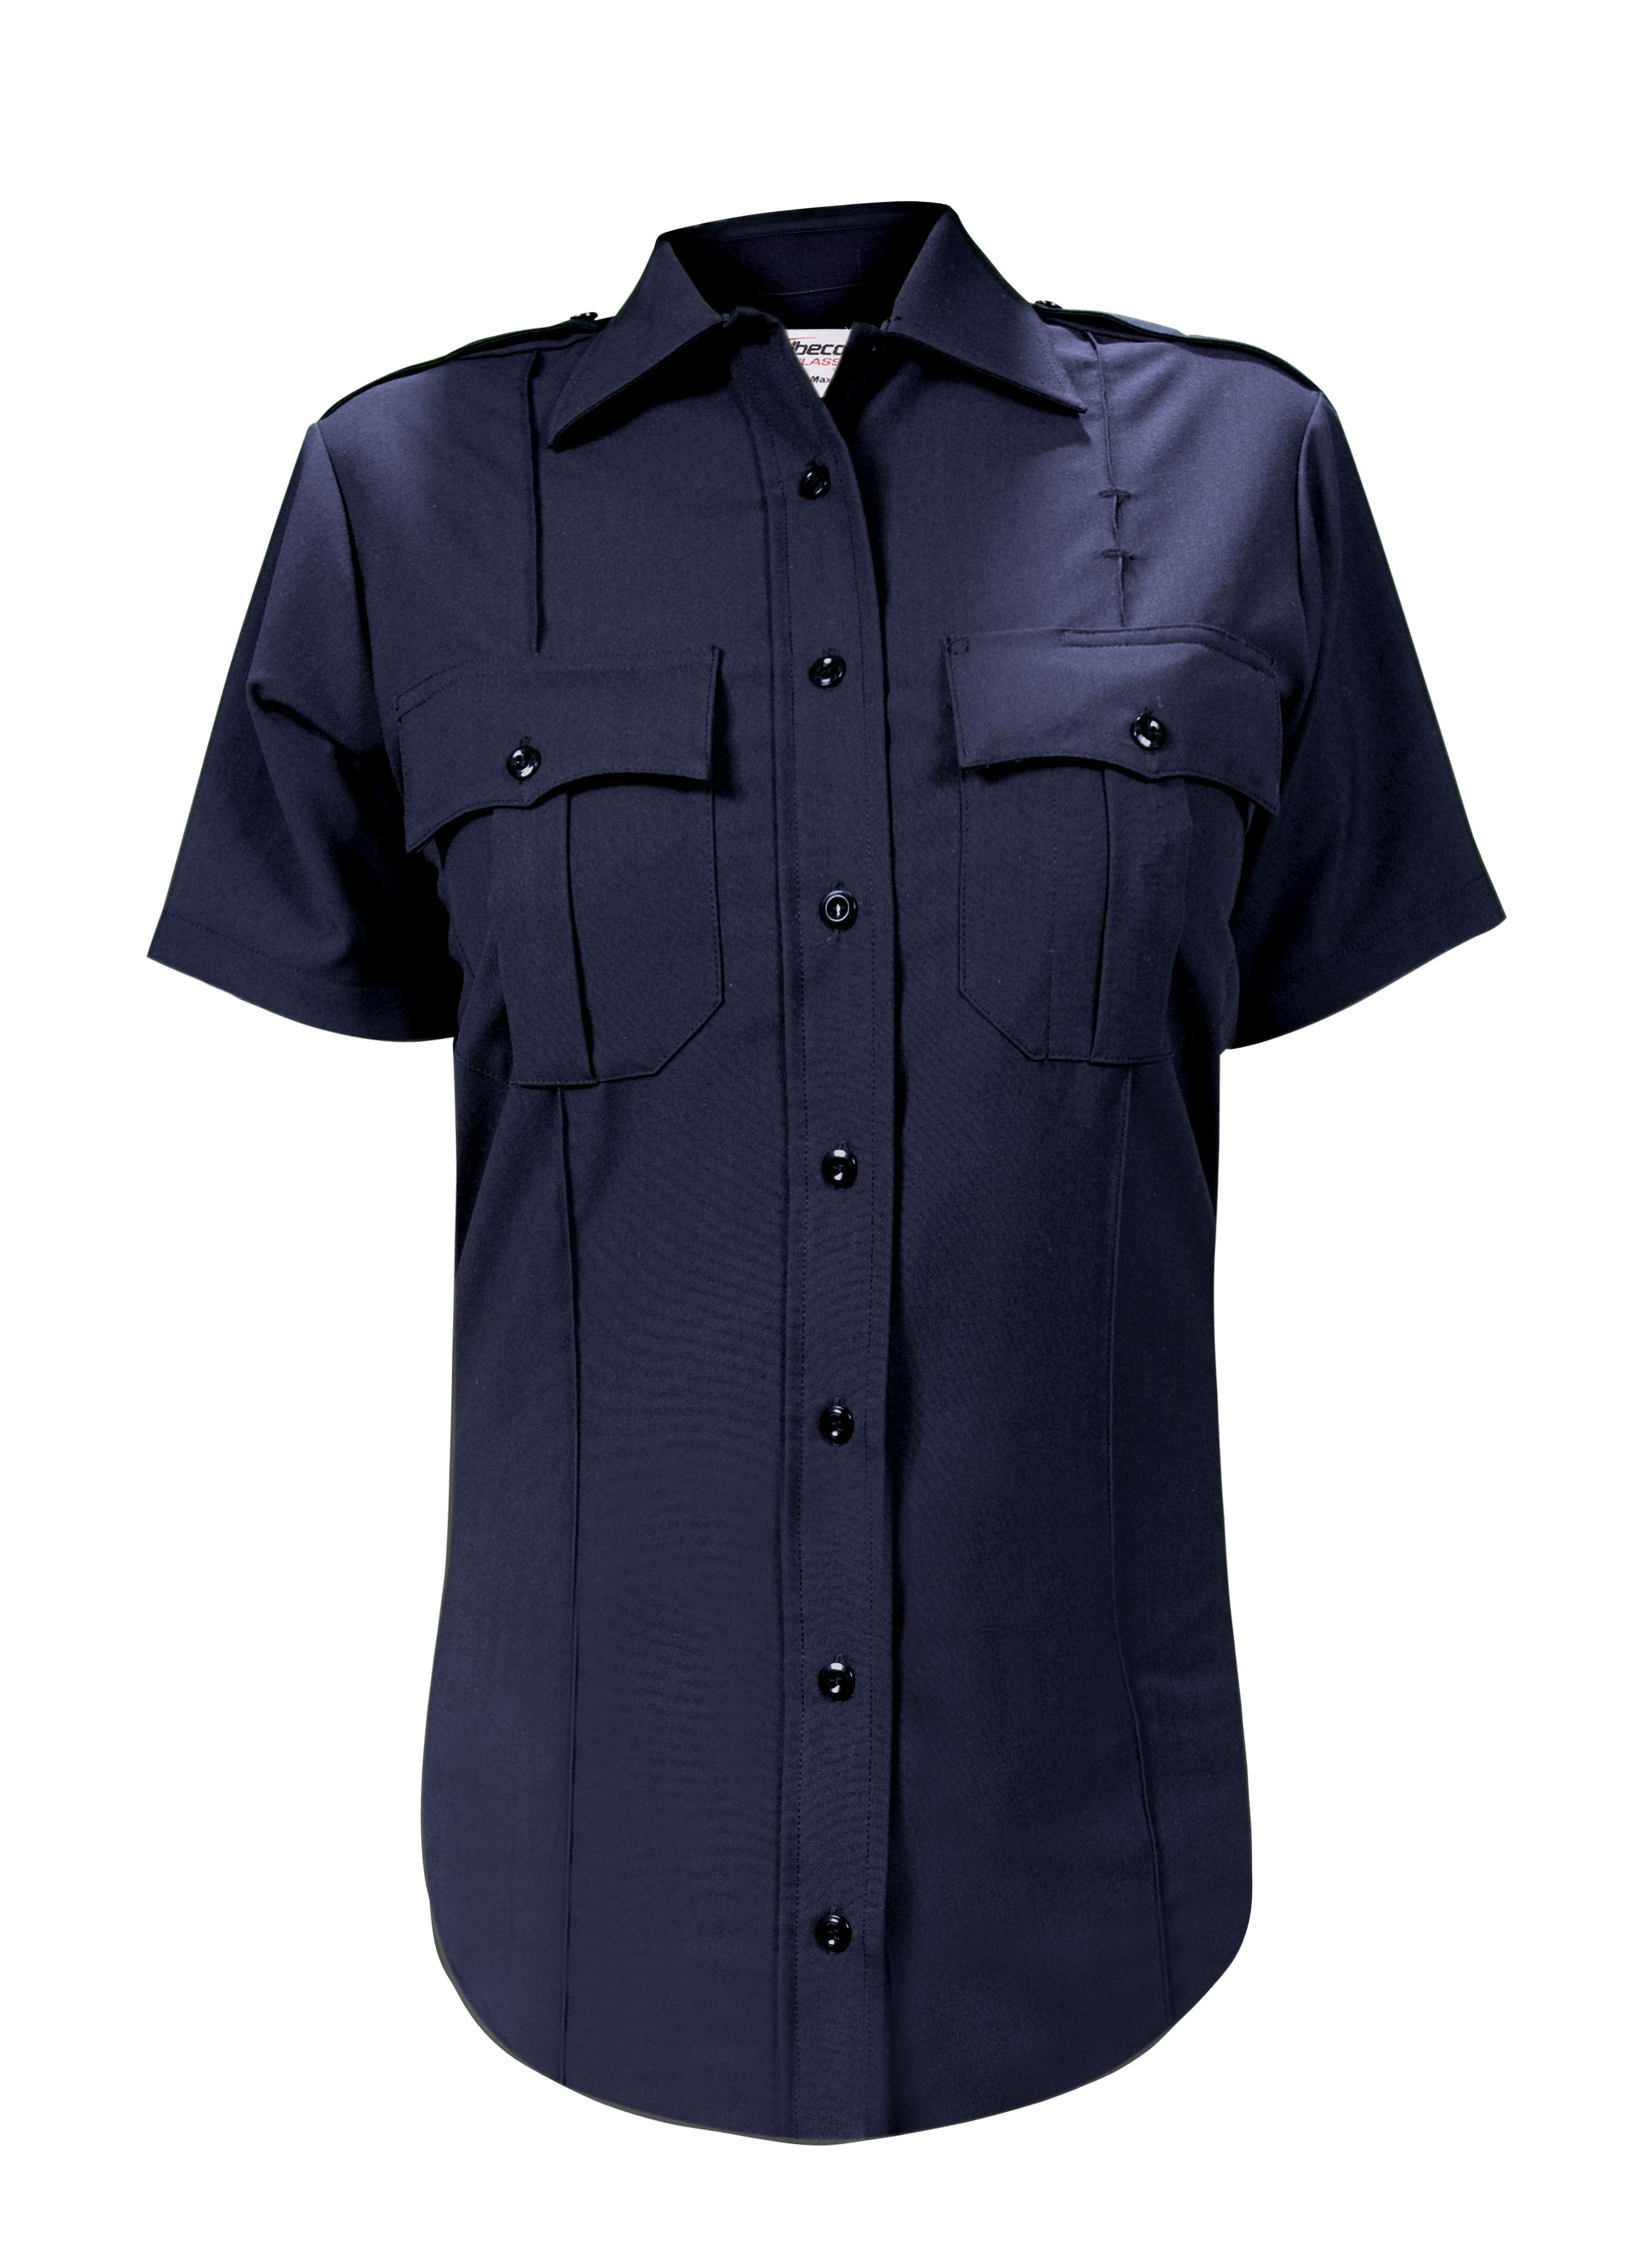 Elbeco - DutyMaxx Short Sleeve Shirt - Women's